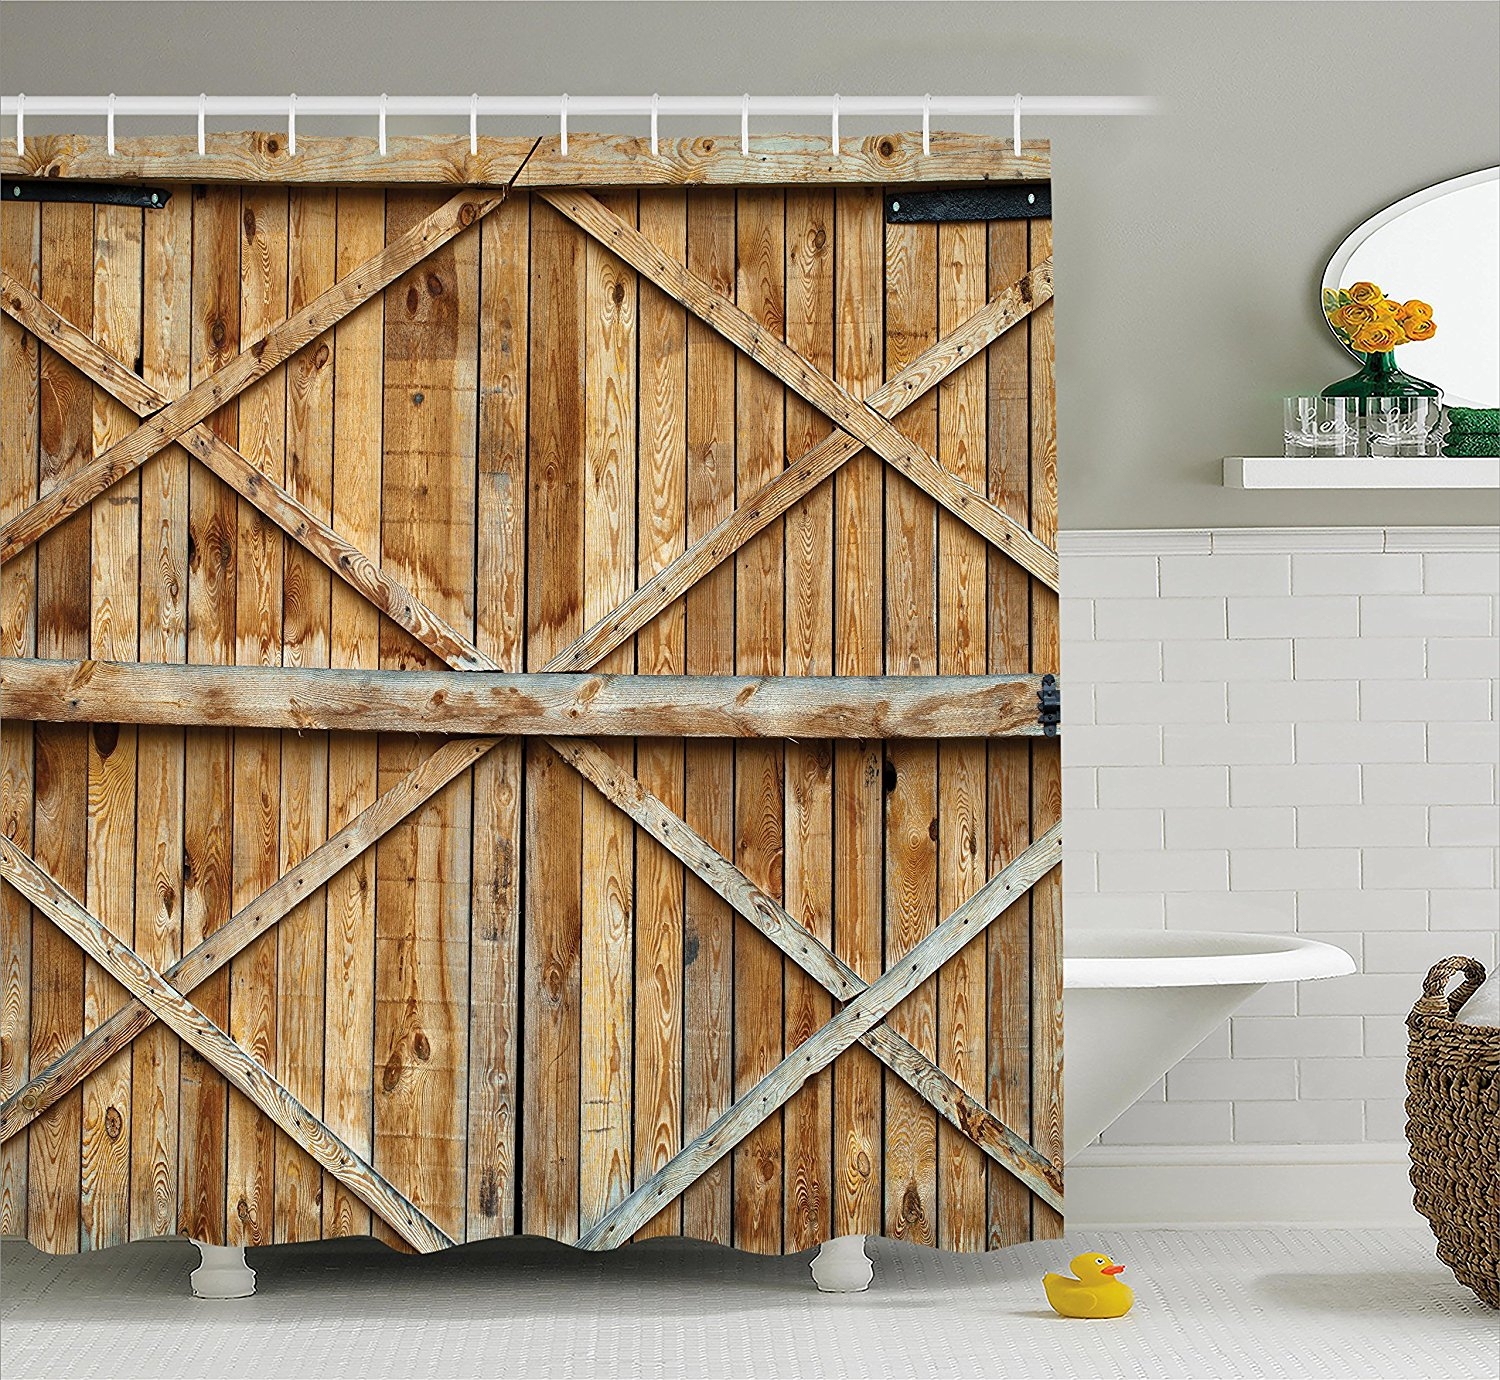 Details about   Rusty Texas Star Wood Plank Barn Door Gate Waterproof Fabric Shower Curtain 72" 